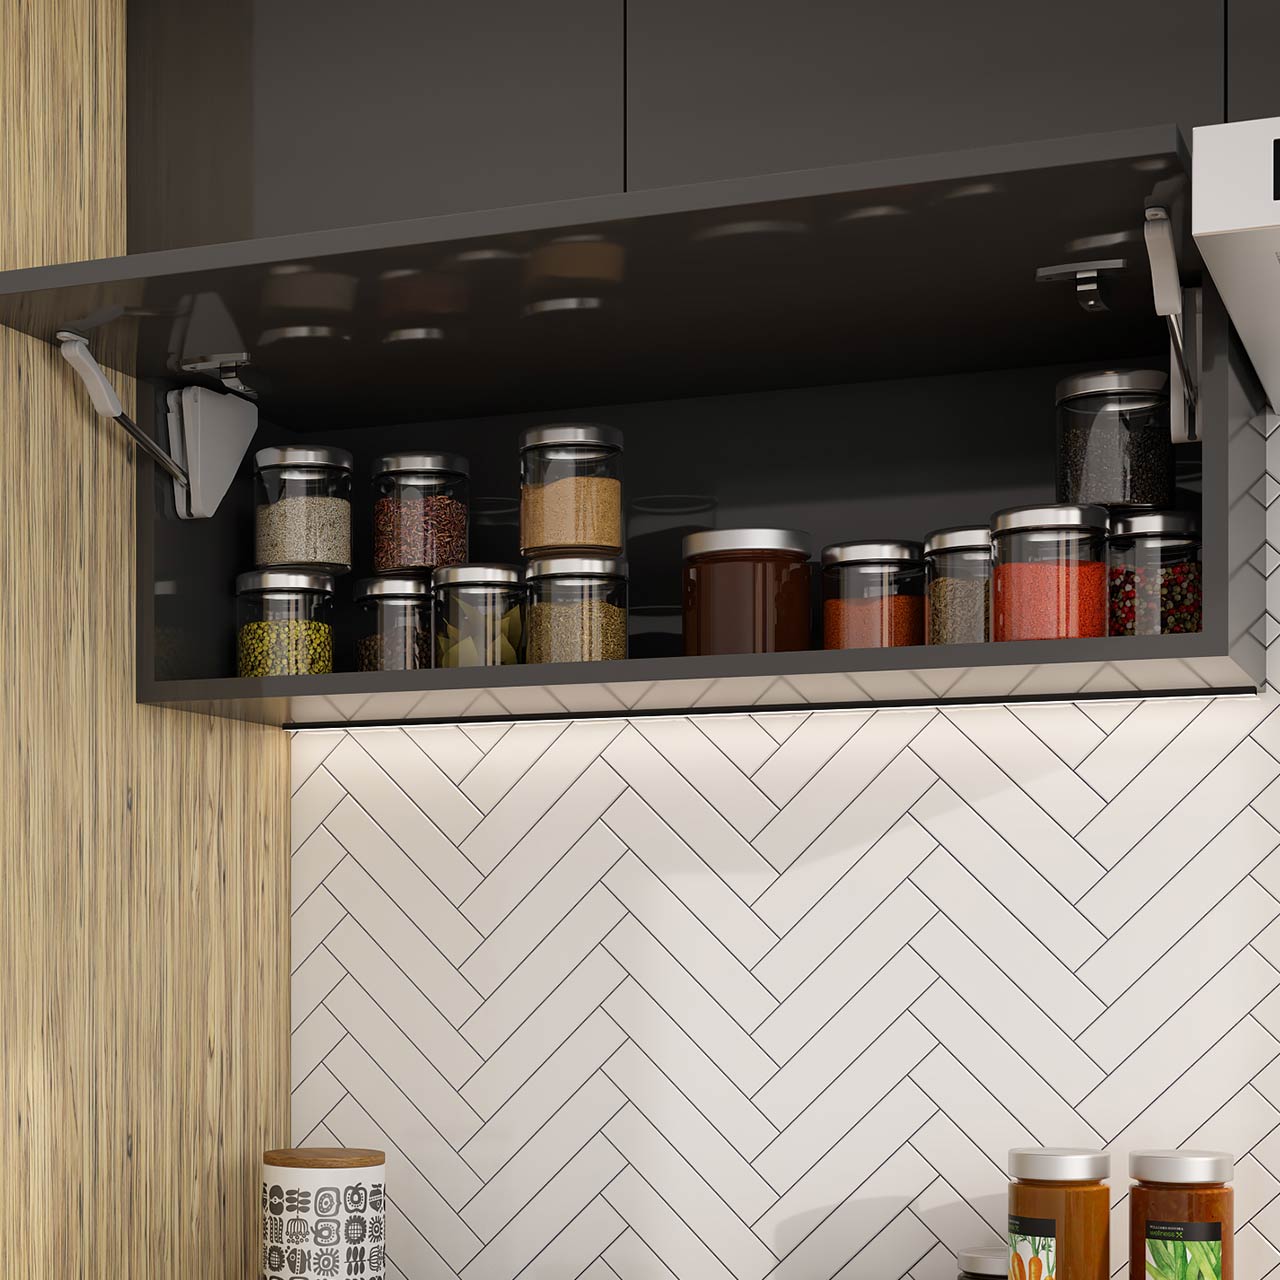 Kitchen Lifts to enhance storage space in your Modular Kitchen.